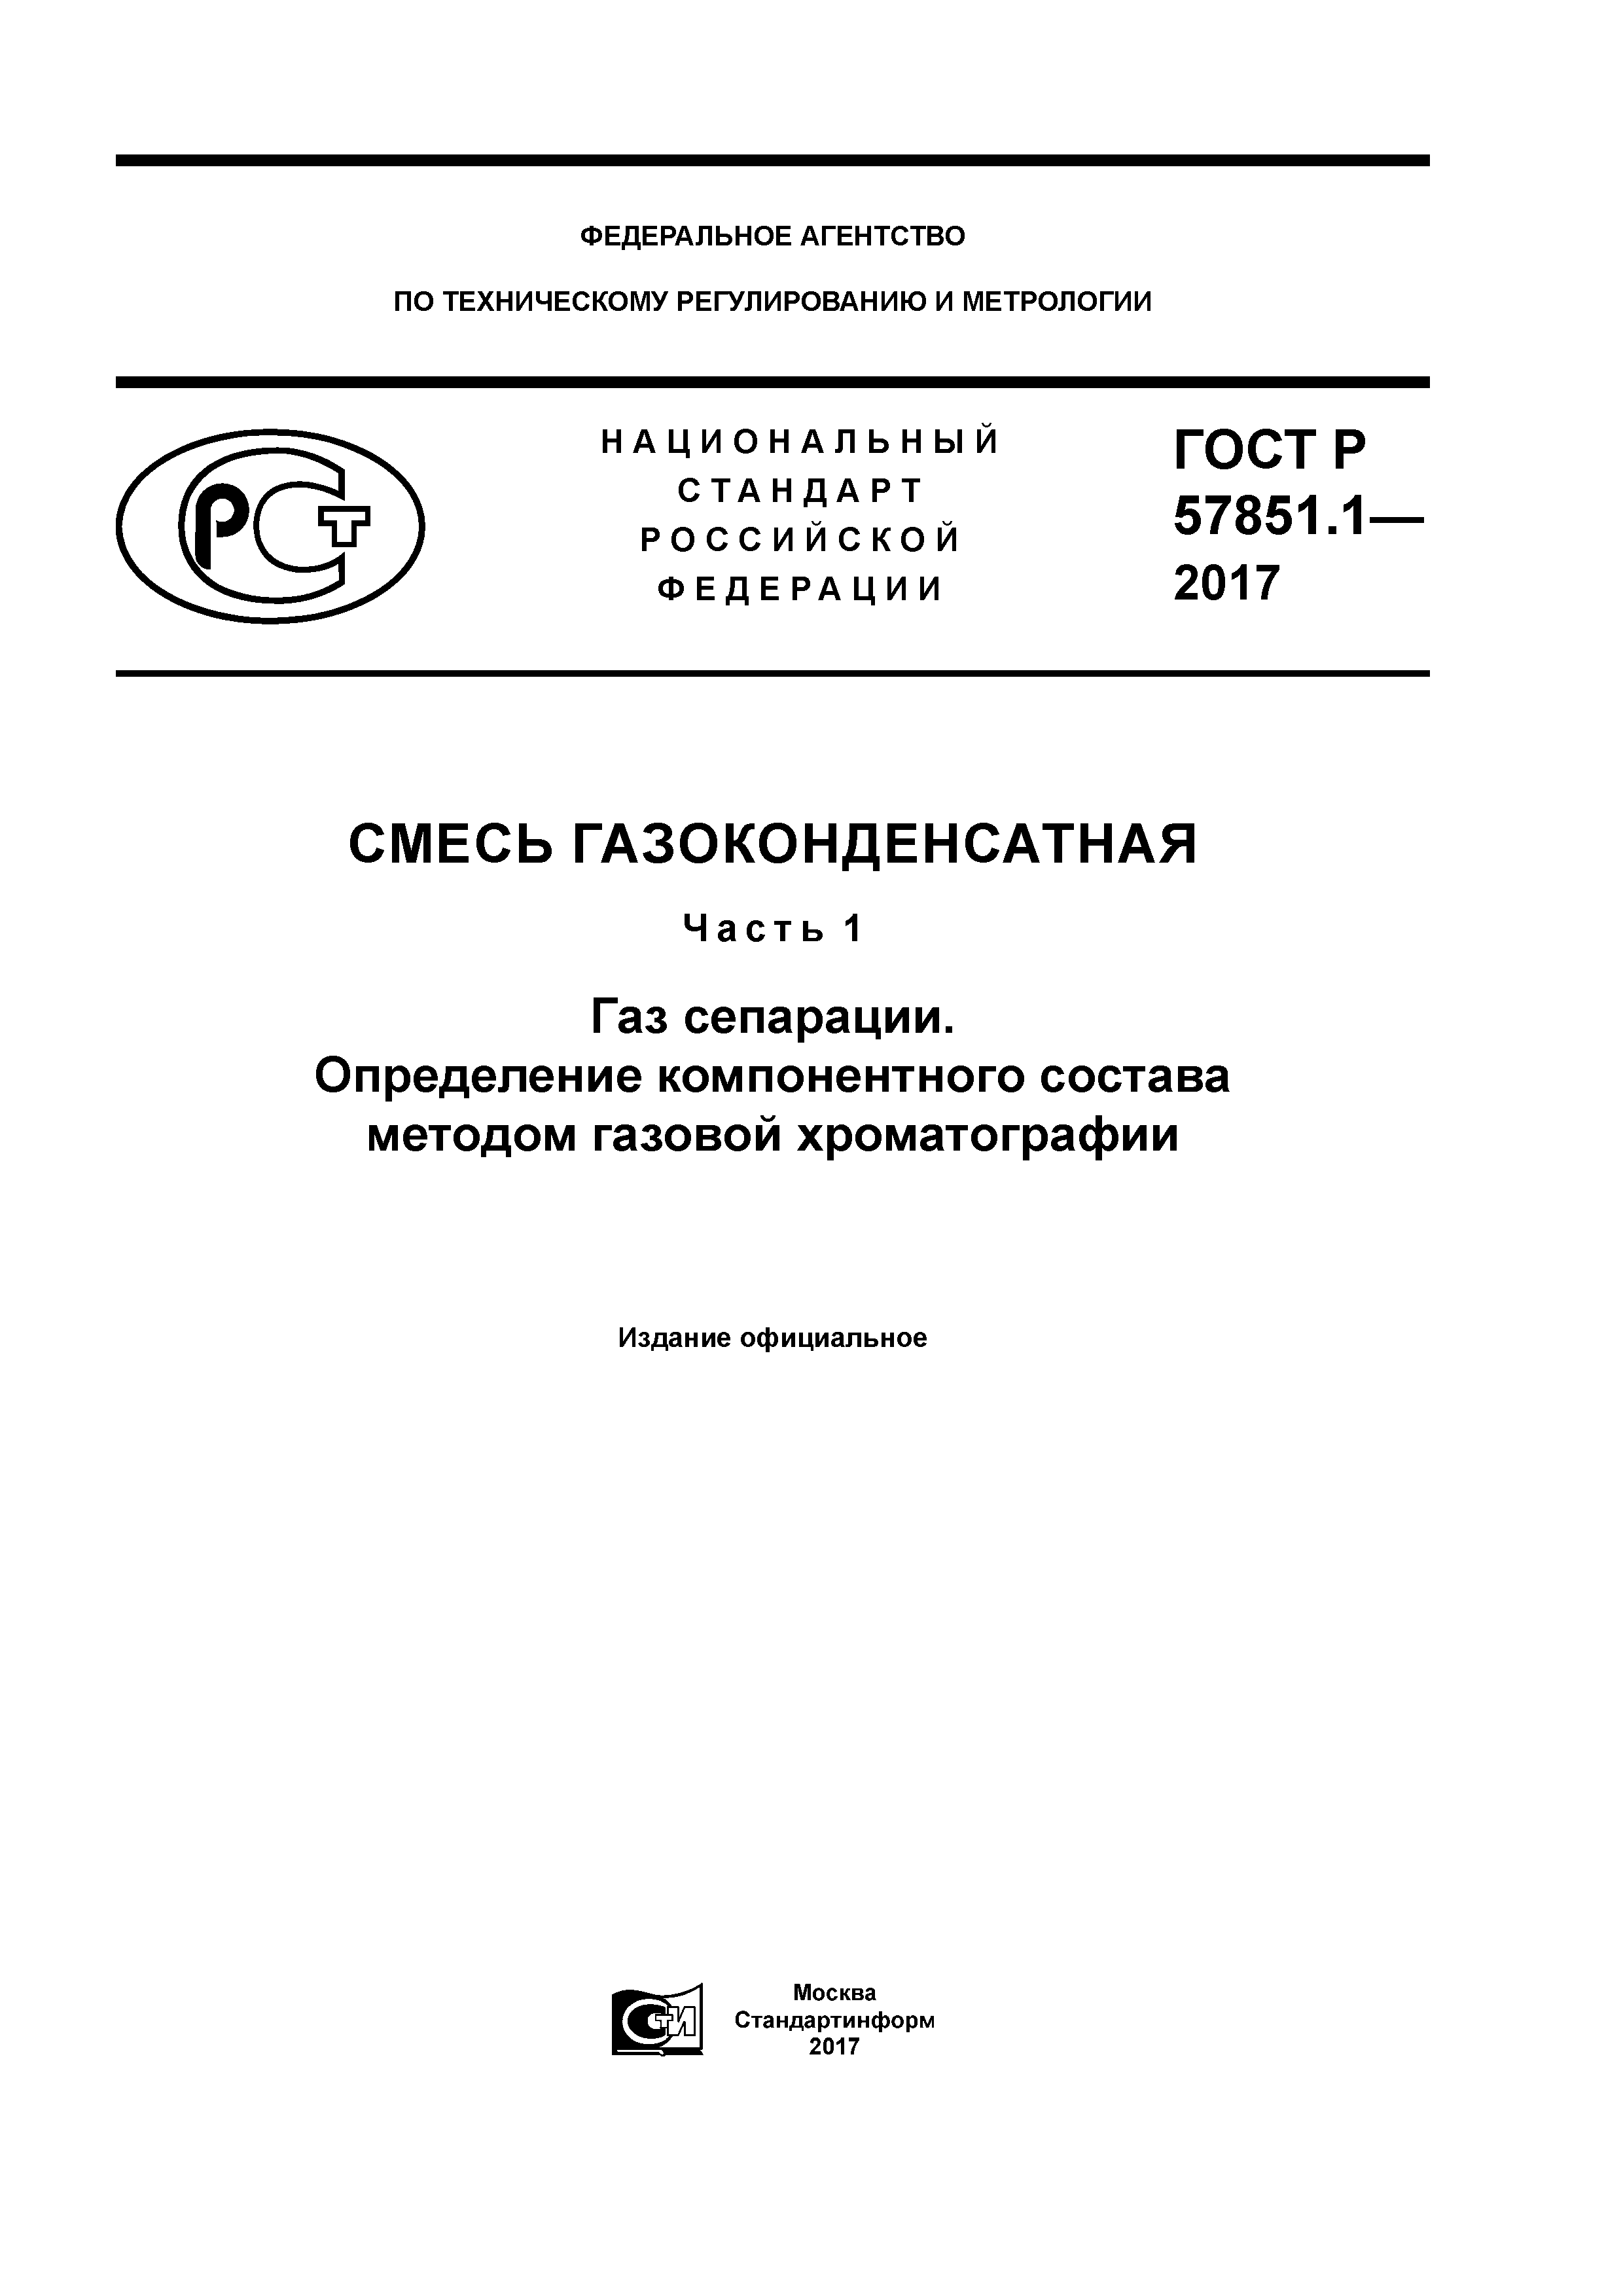 ГОСТ Р 57851.1-2017